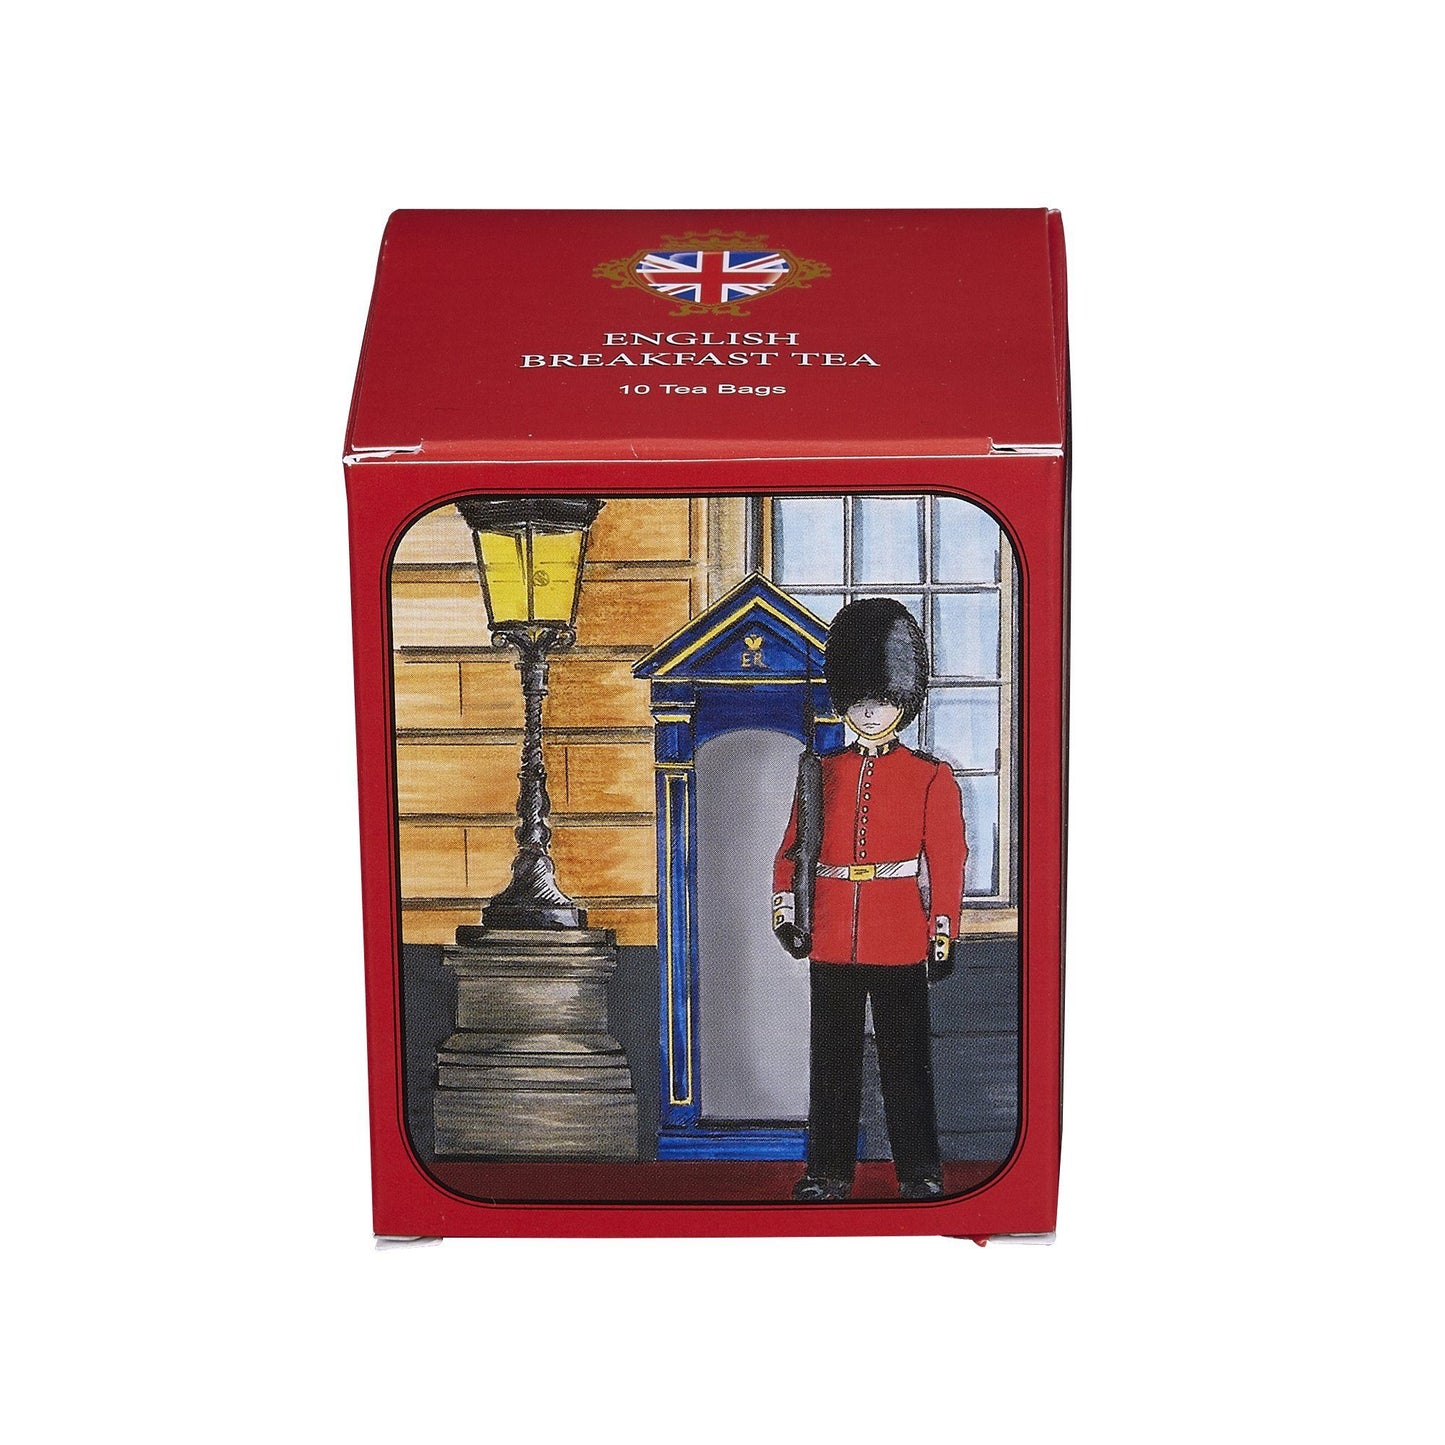 Coldstream Guard English Breakfast Tea 10 Teabag Carton Black Tea New English Teas 